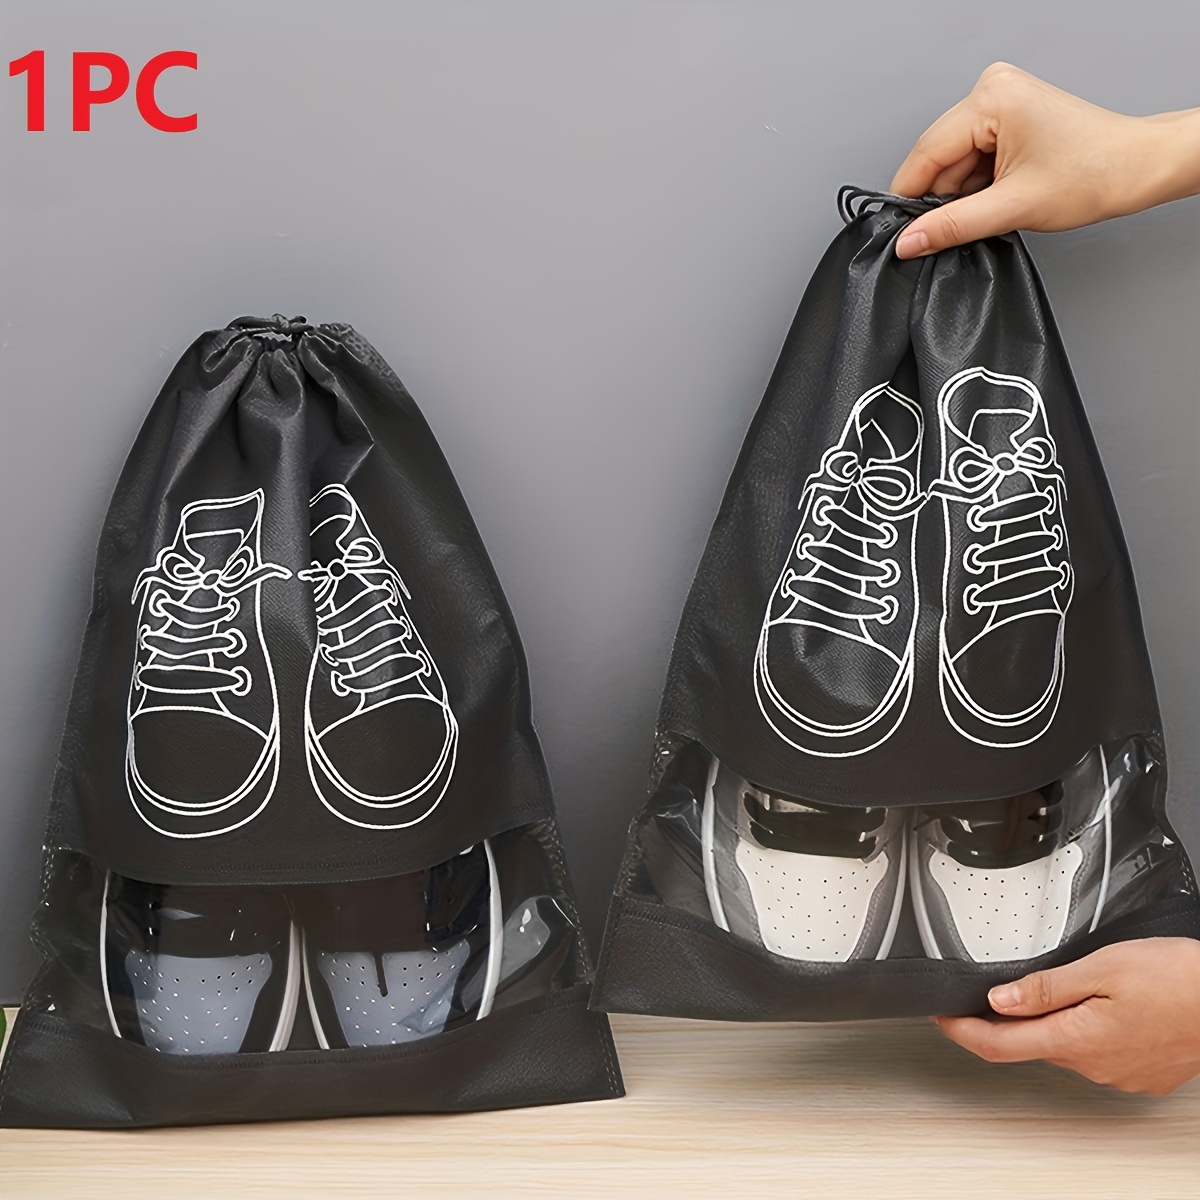 1pc Black Shoes Storage Bag, Minimalist Drawstring Non-woven